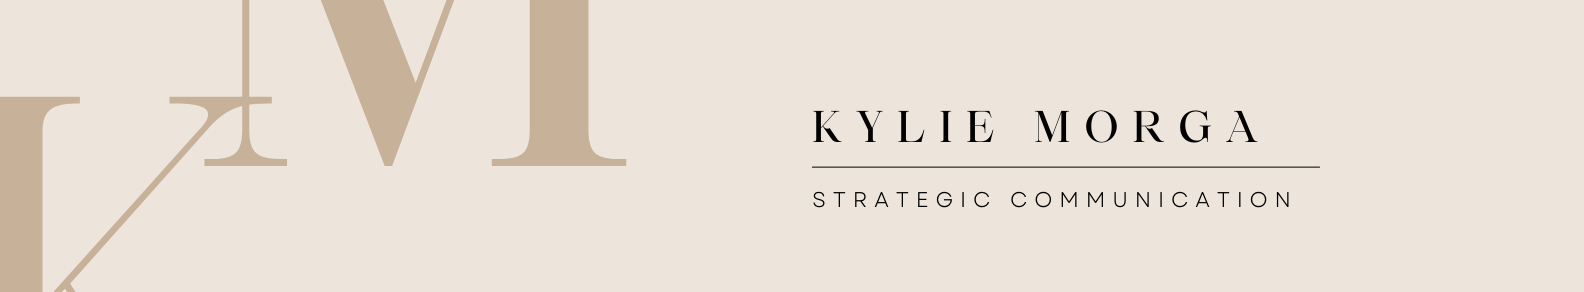 Kylie Morga's profile banner